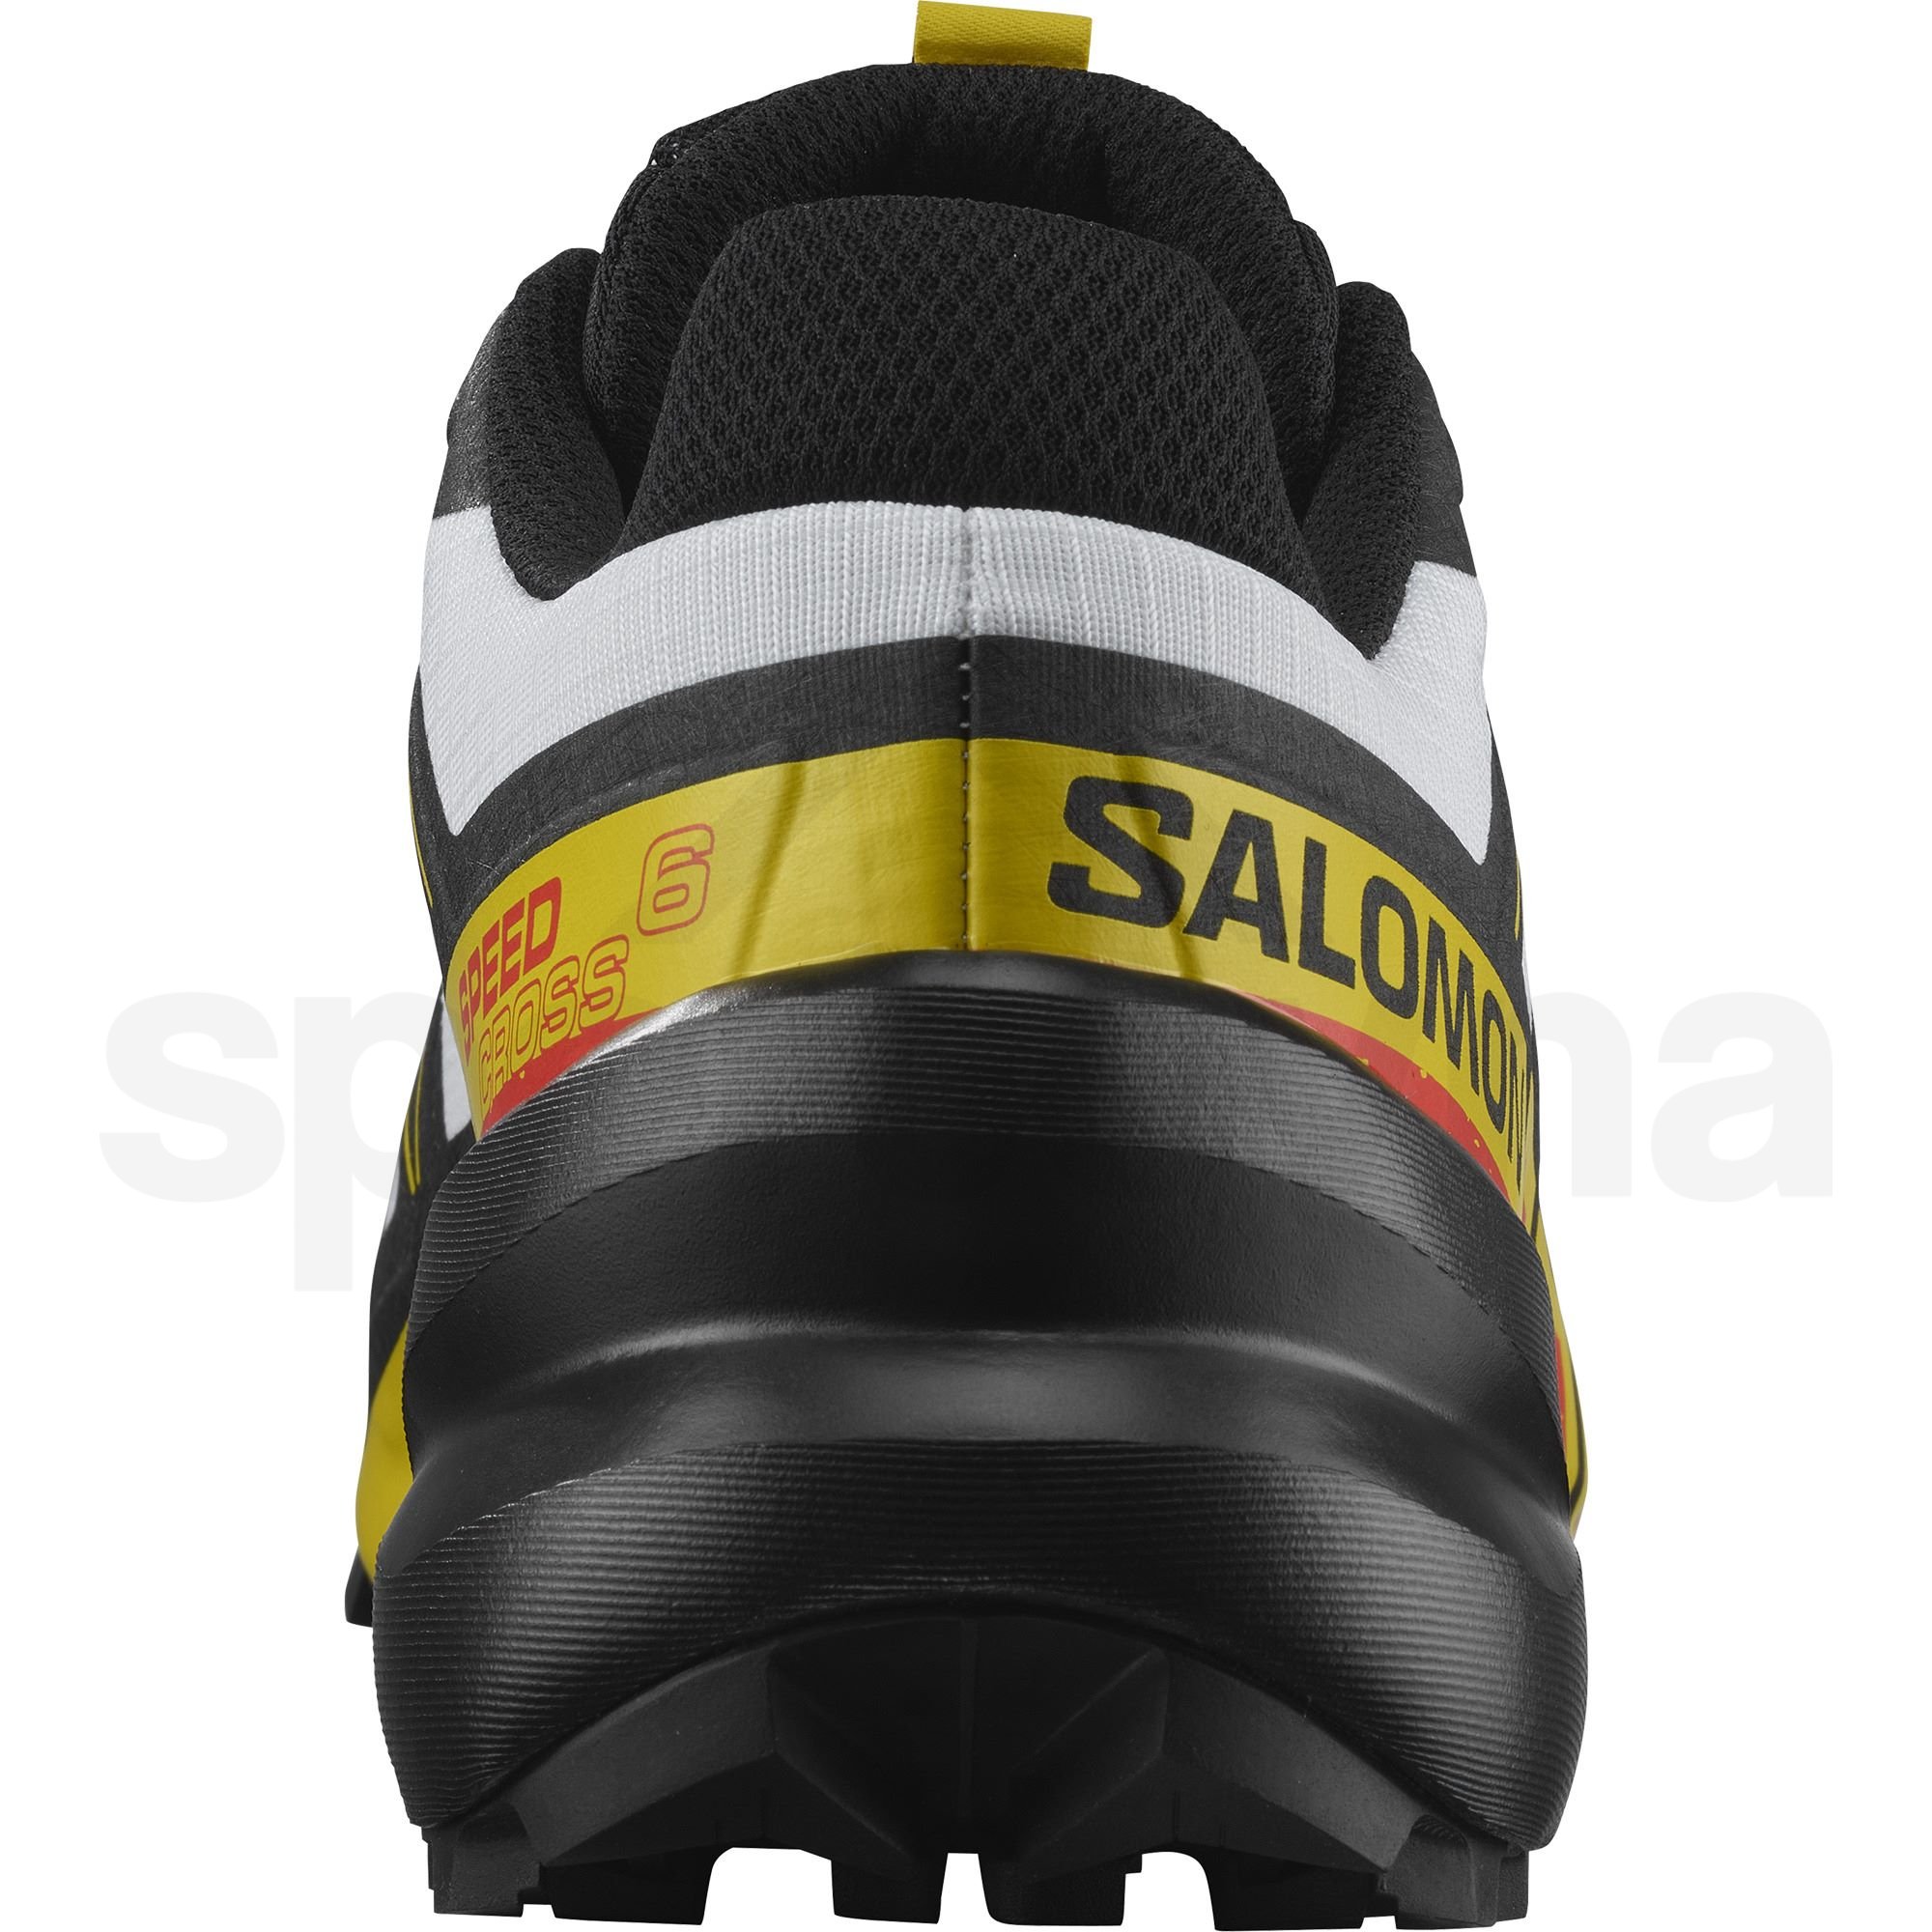 Obuv Salomon Speedcross 6 M - bílá/černá/žlutá